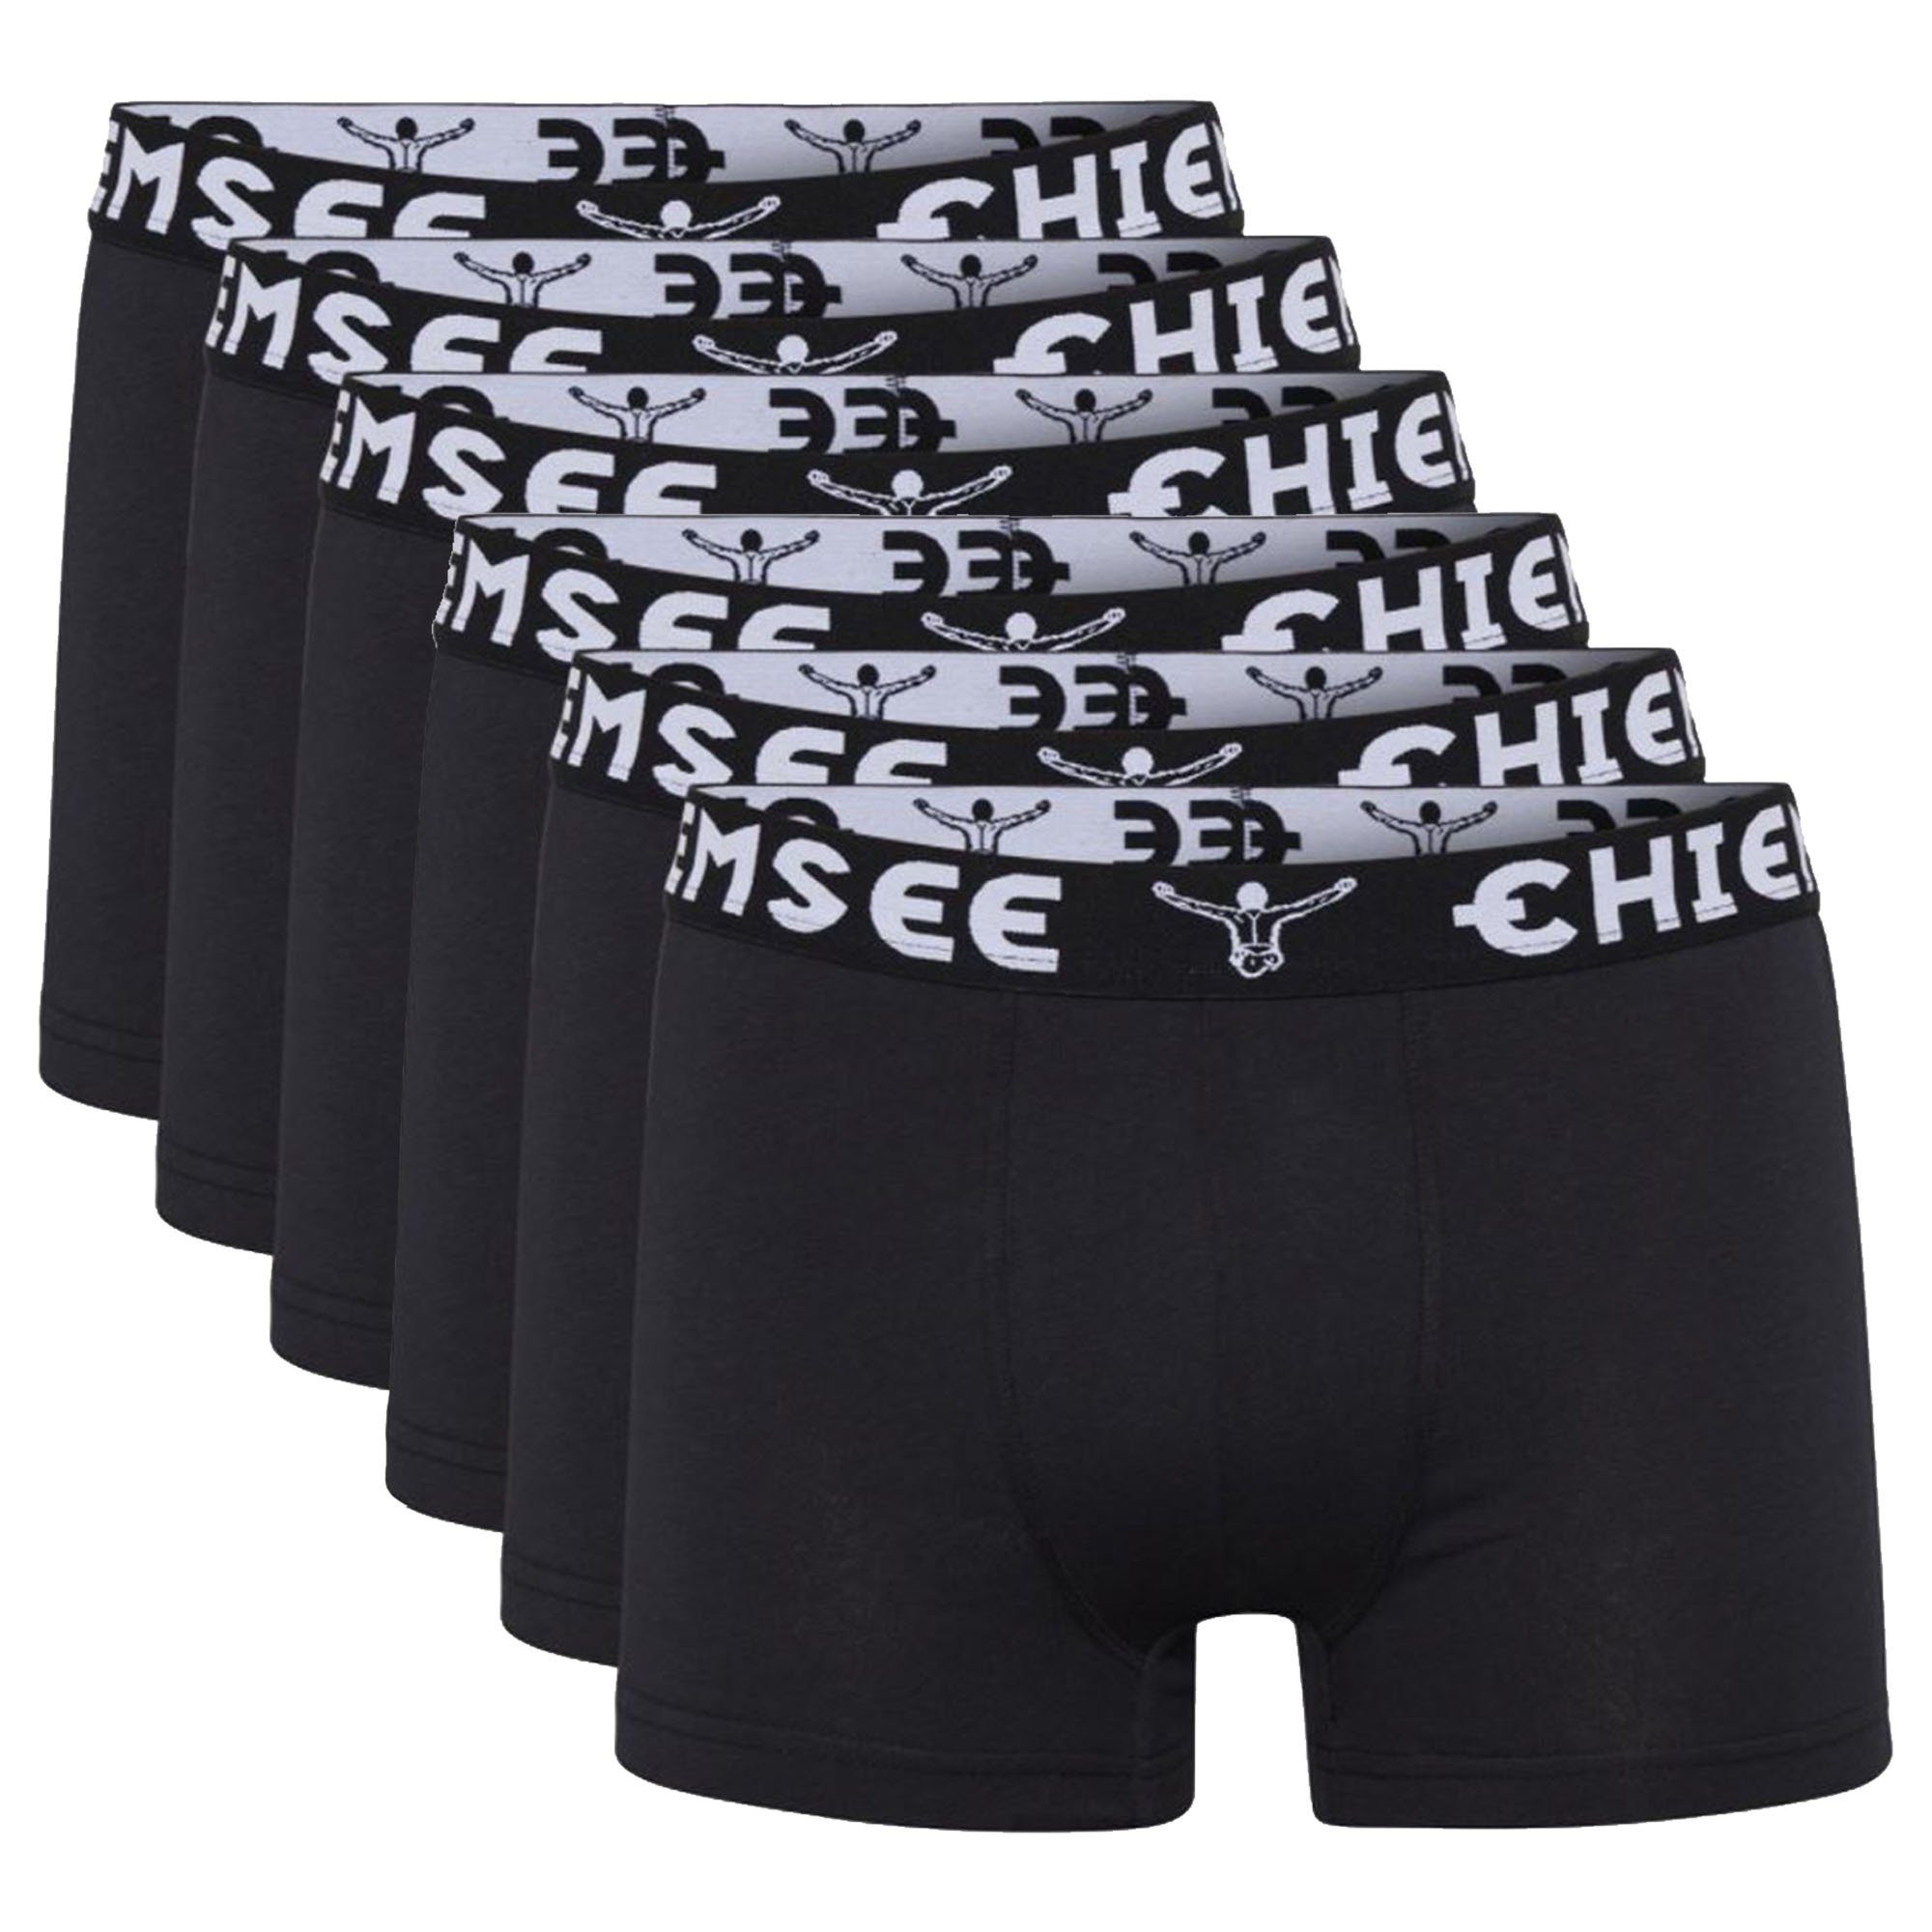 Chiemsee Boxer Herren - Boxershorts, Shorts, Logobund Schwarz 6er Pack